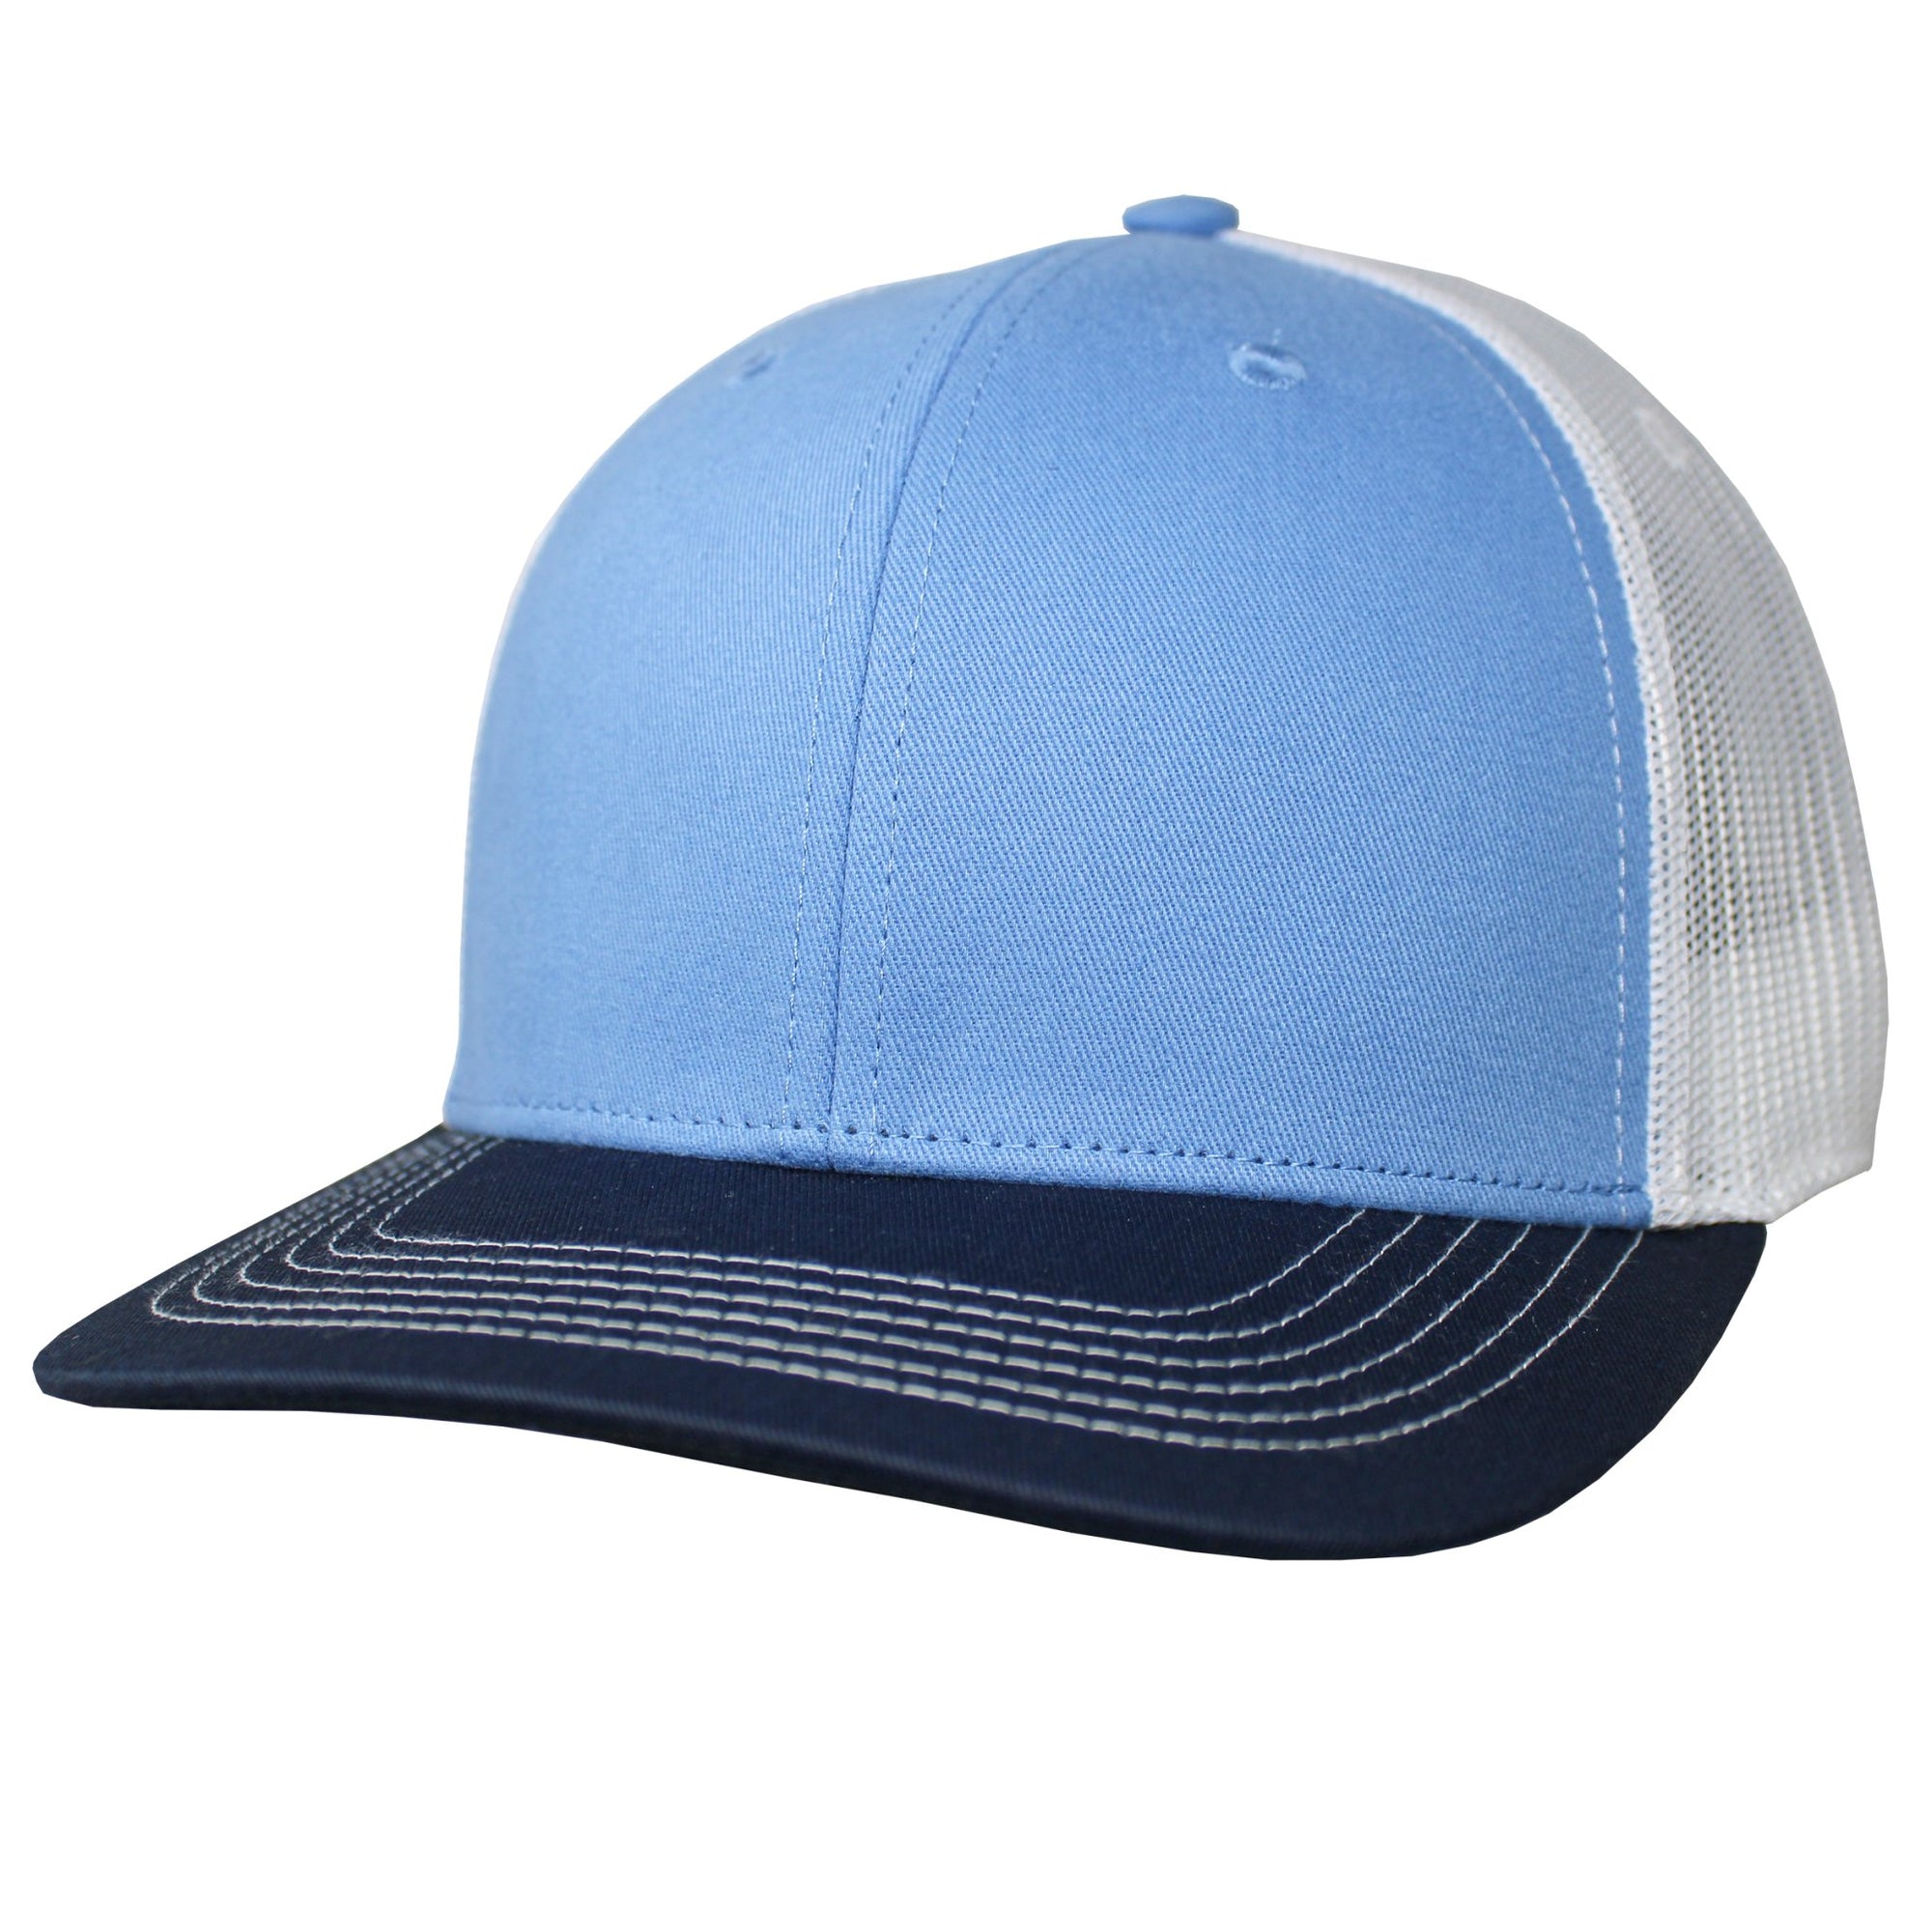 Blank Headwear - BC23 / 6 Panel Performance Trucker Cap - Carolina Blue / White / Navy - Black Cat MFG - Hat